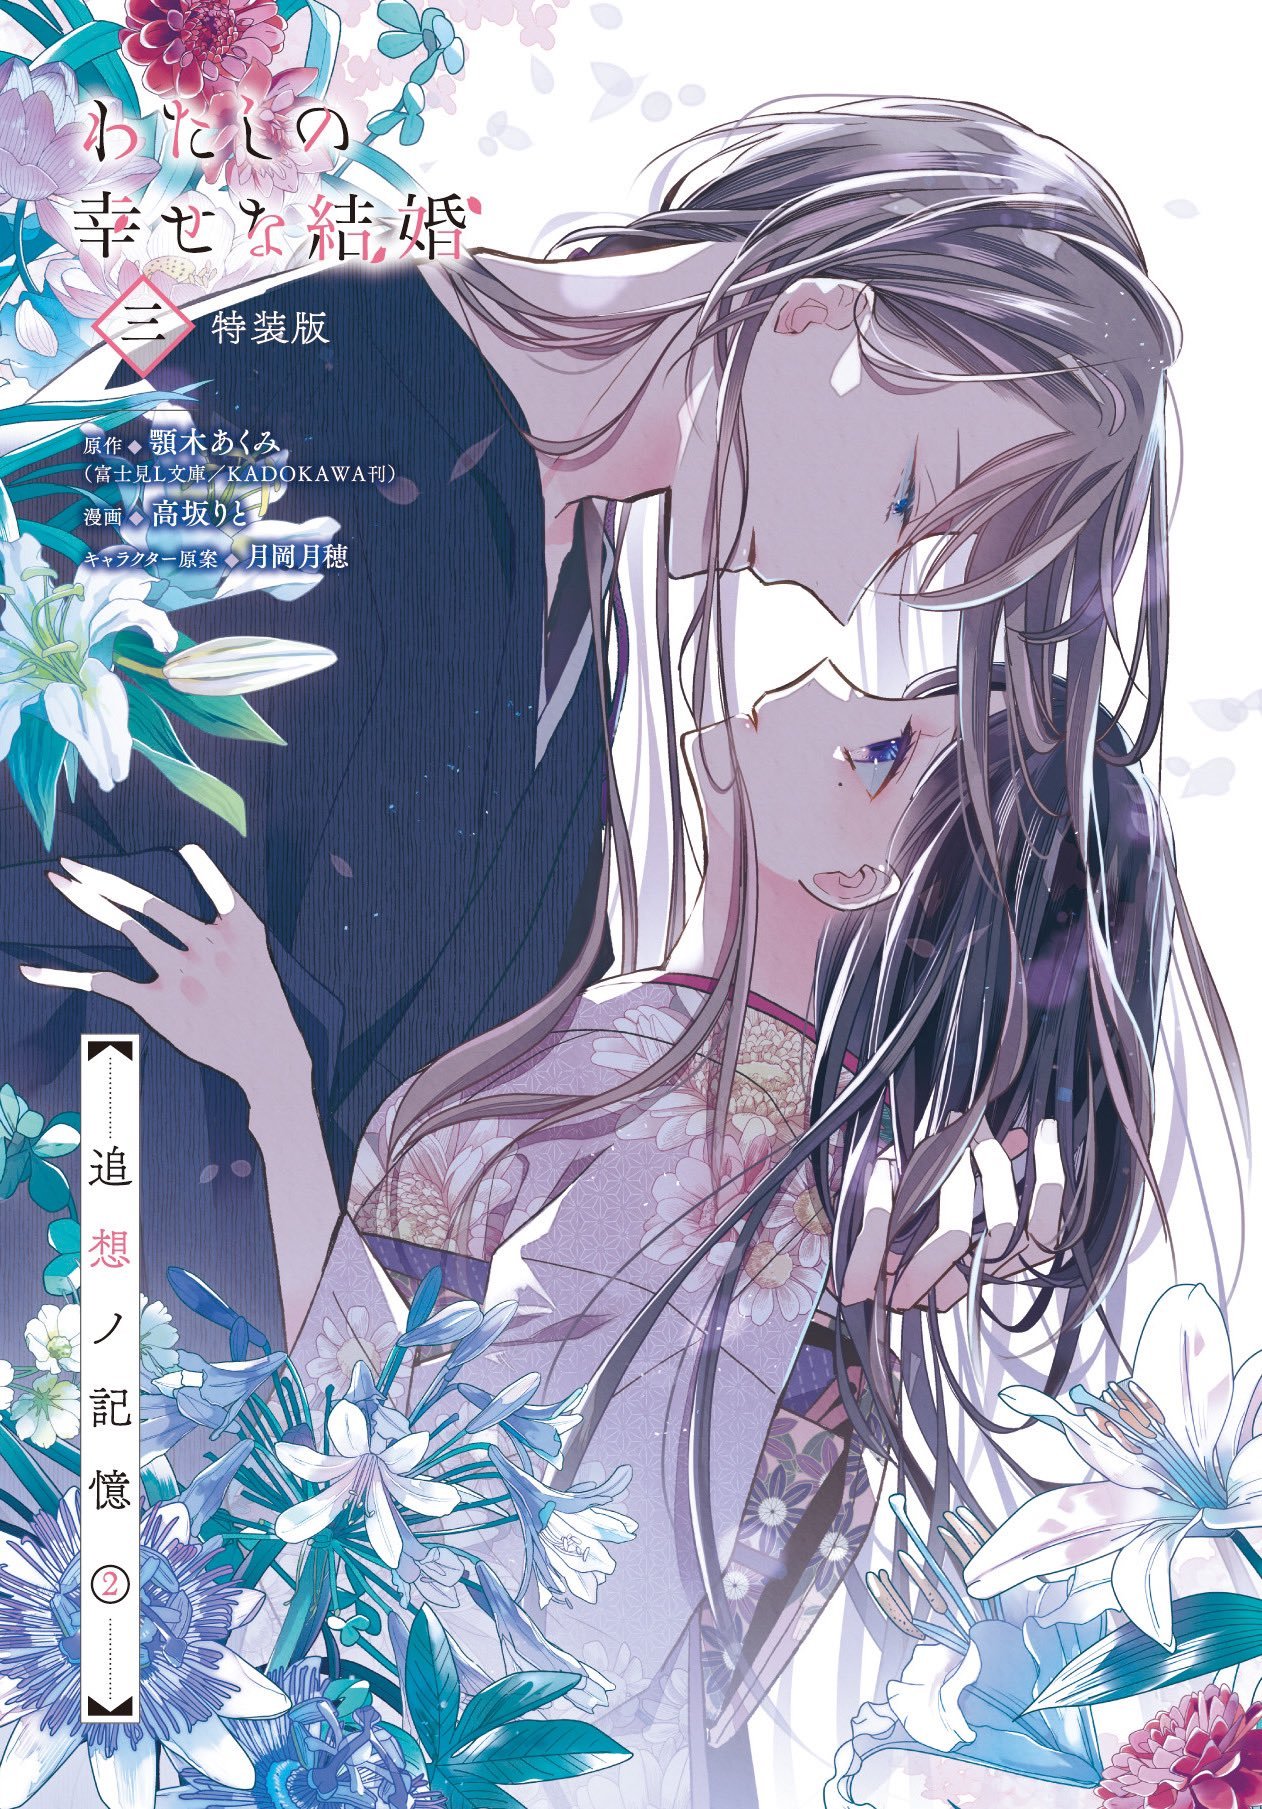 ART] Watashi no Shiawase no Kekkon vol. 3 special edition cover : r/manga